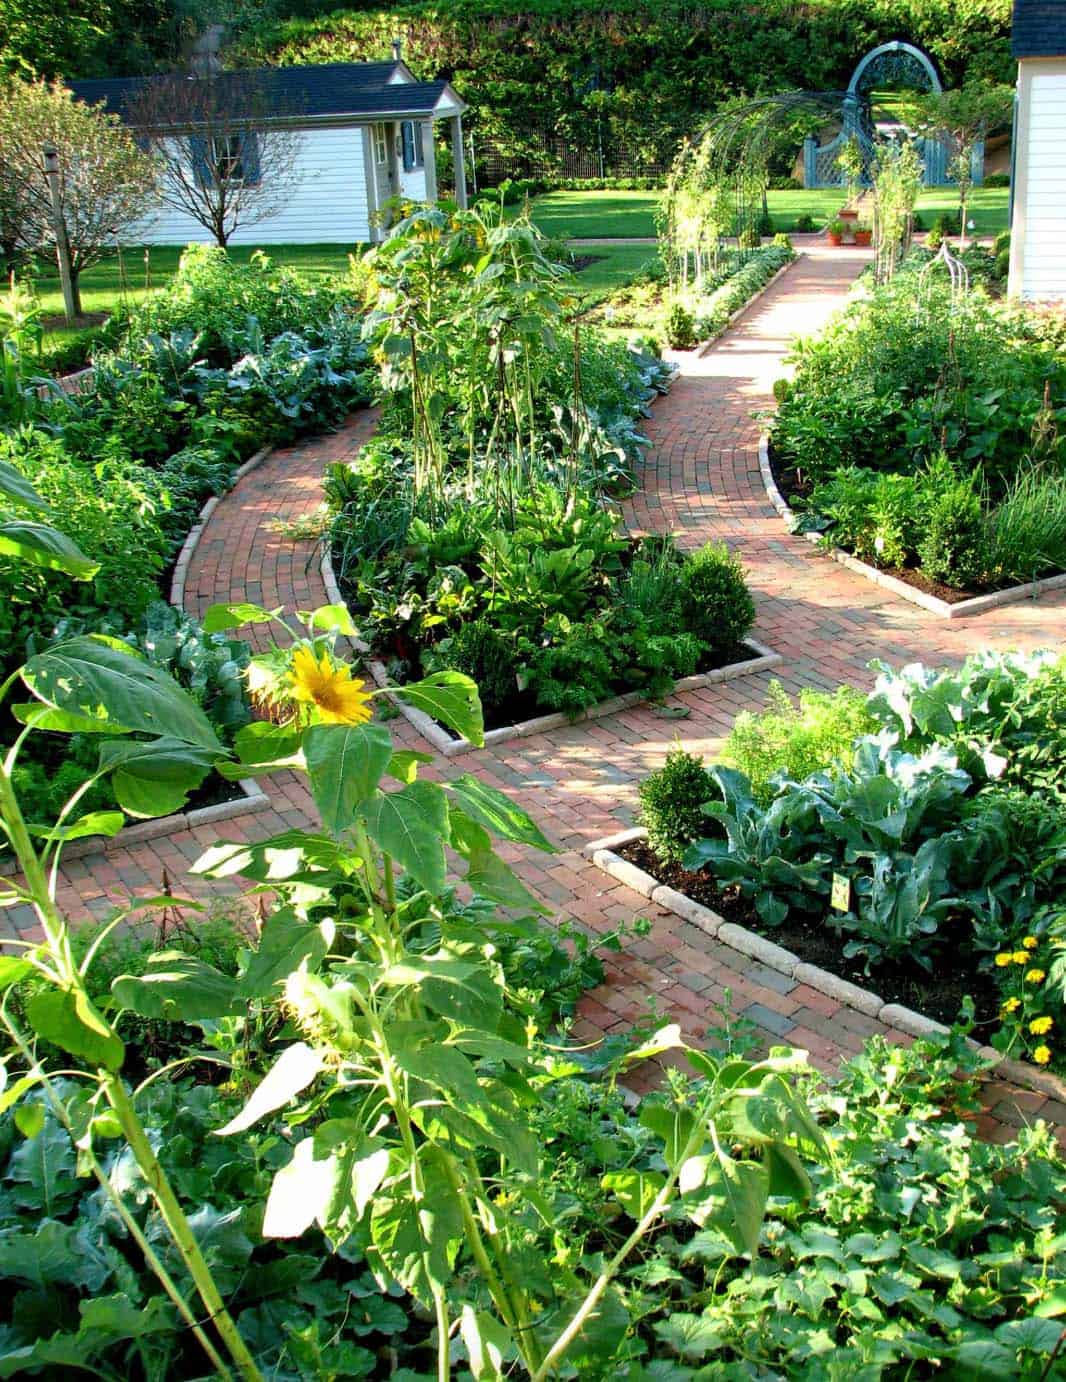 Square Foot Garden Planner